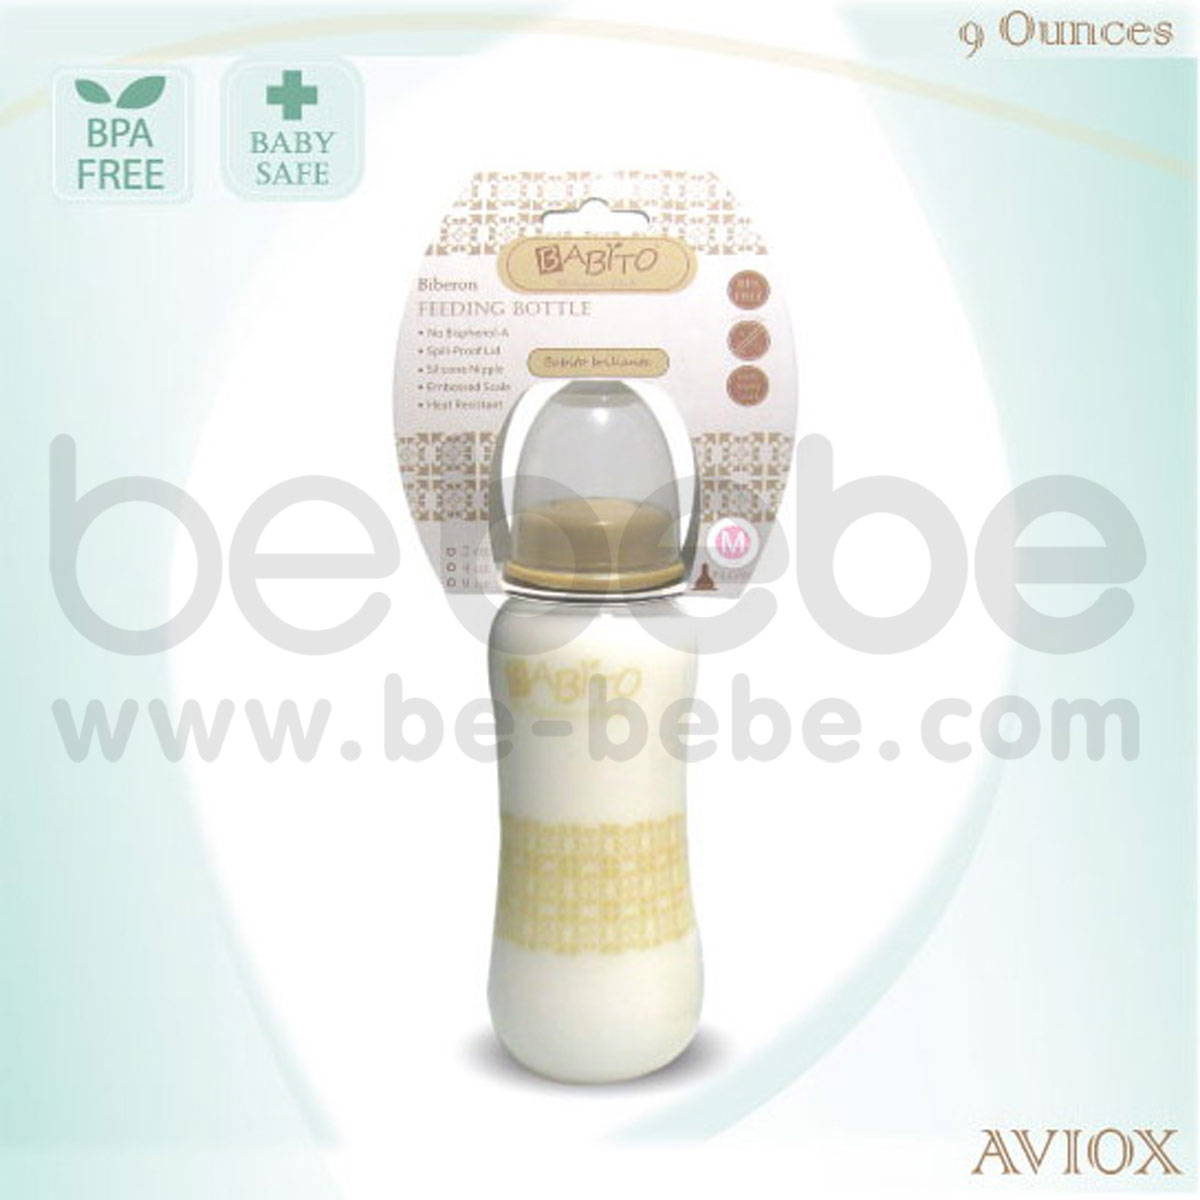 BABITO : 9oz BPA-Free Baby Feeding Bottle, Aviox Budget